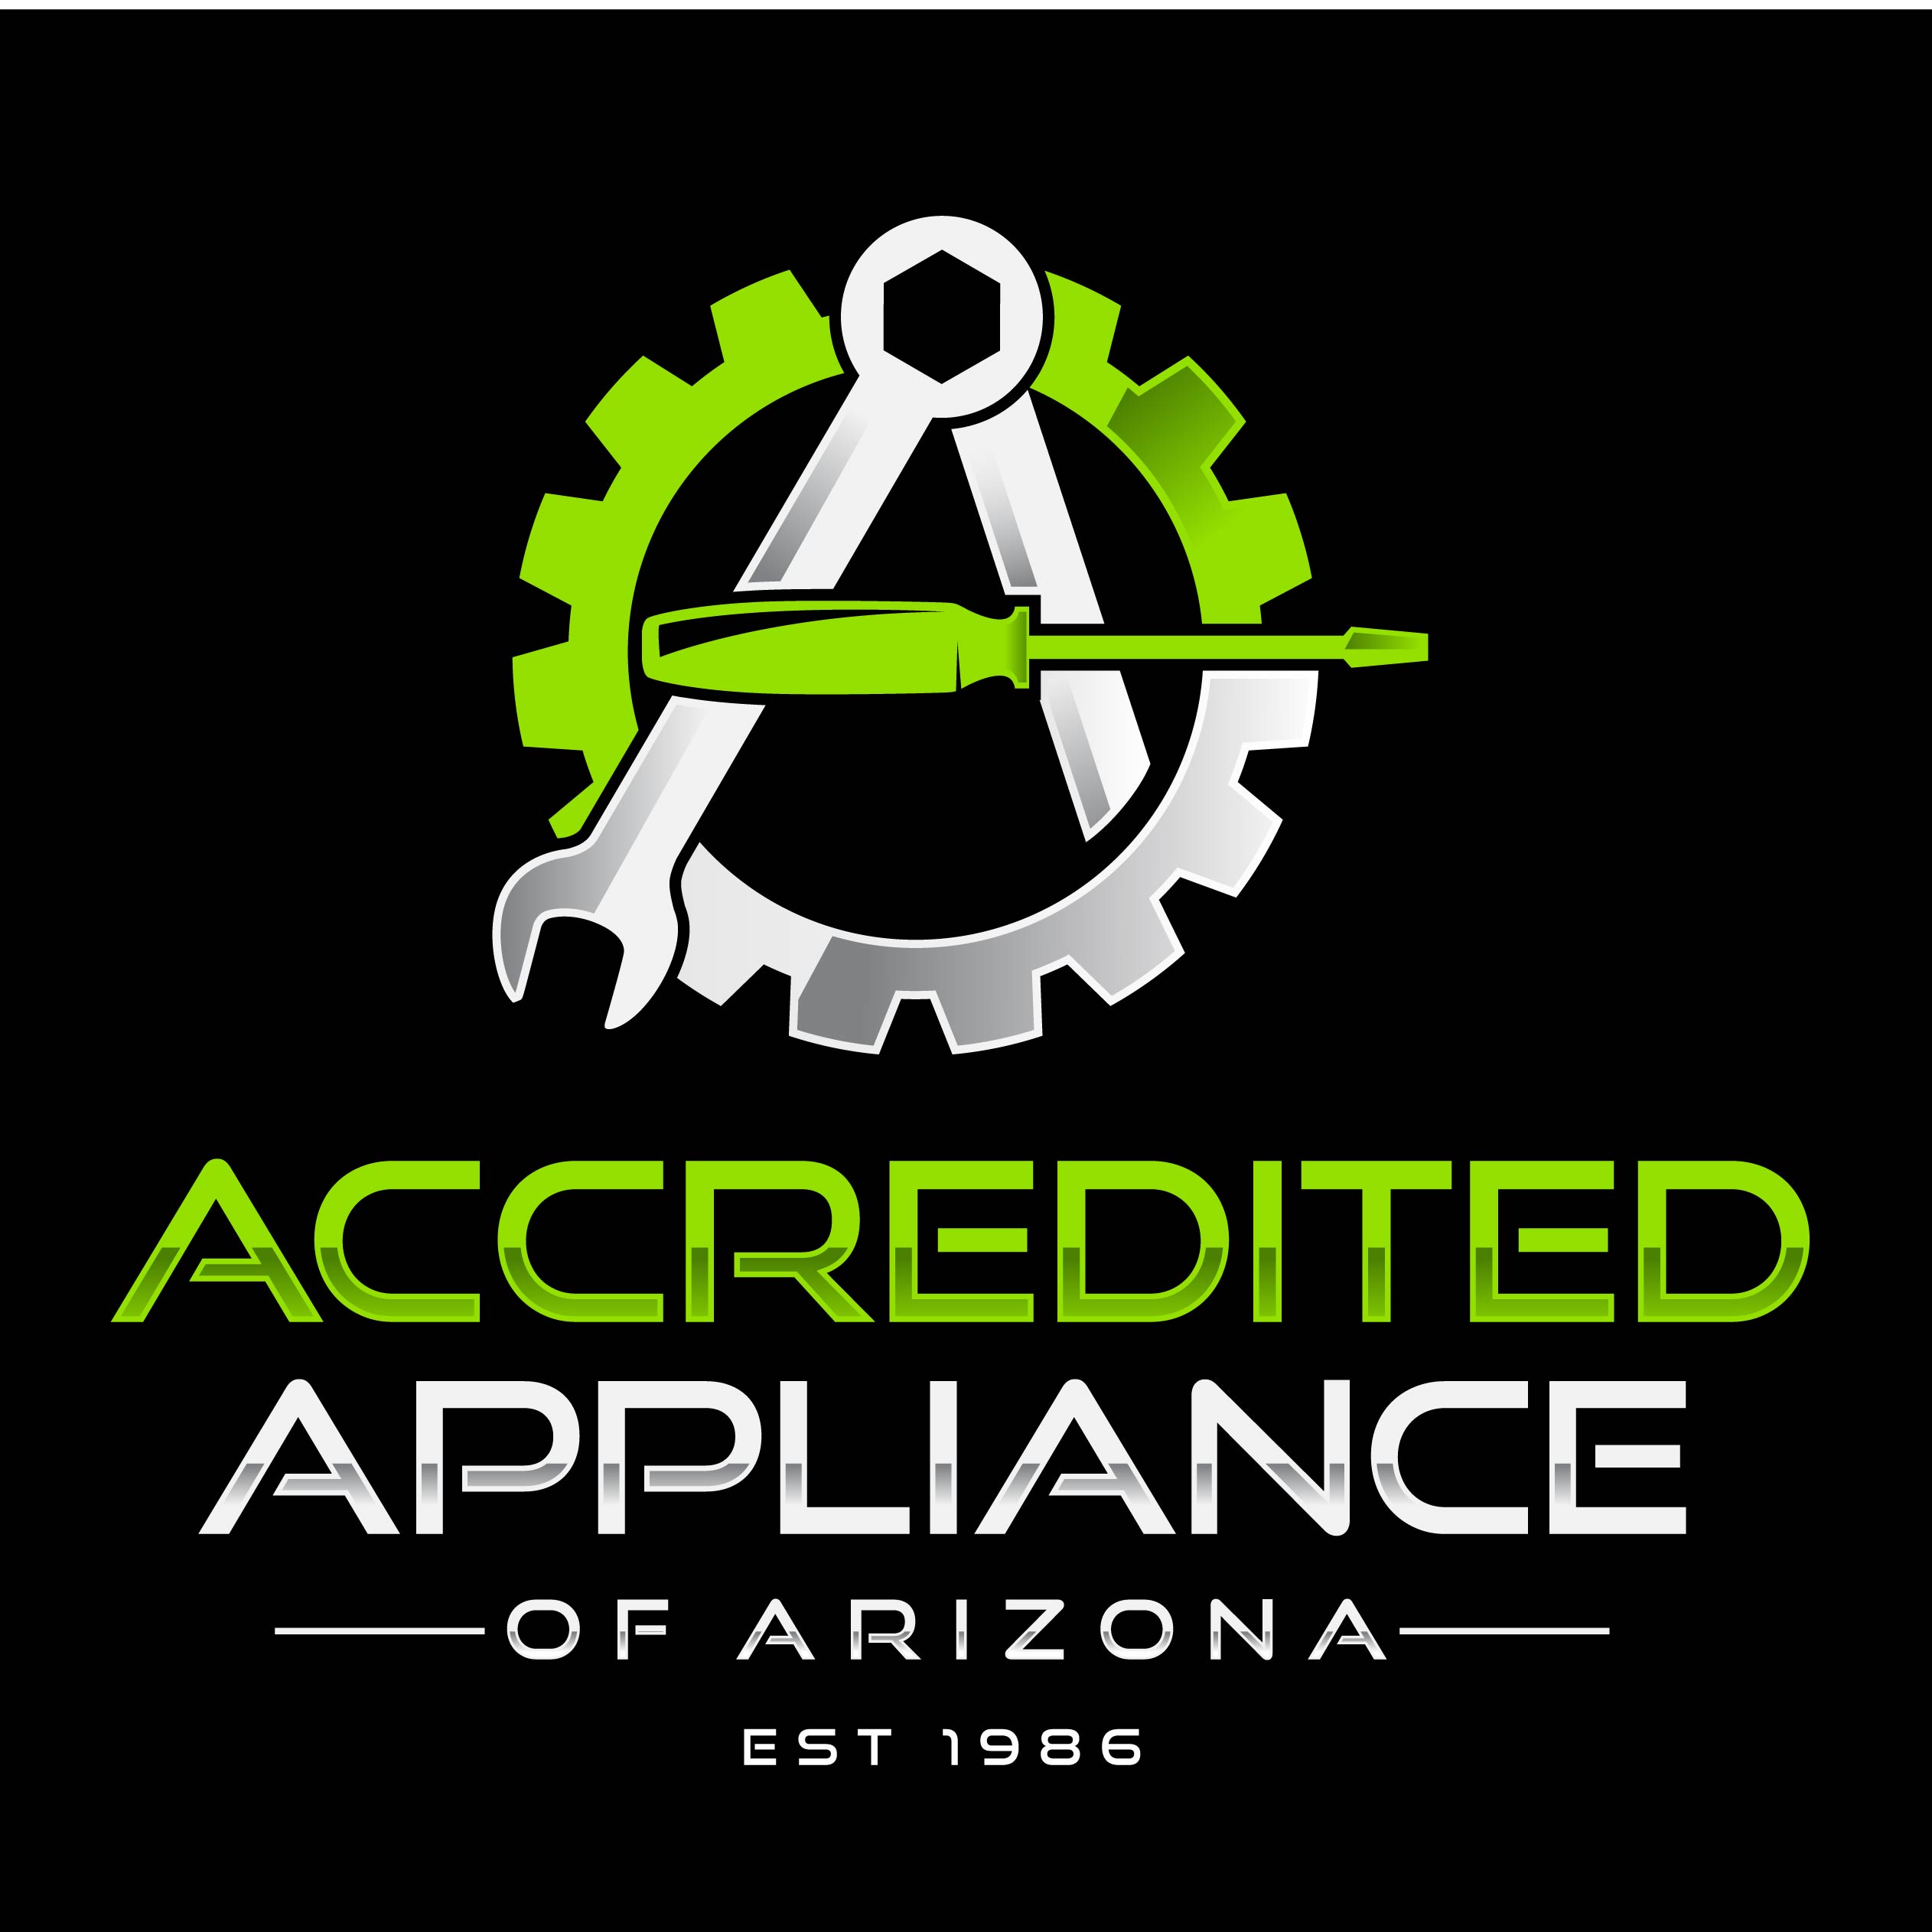 Arizona residential appliance installer license prep class for apple download